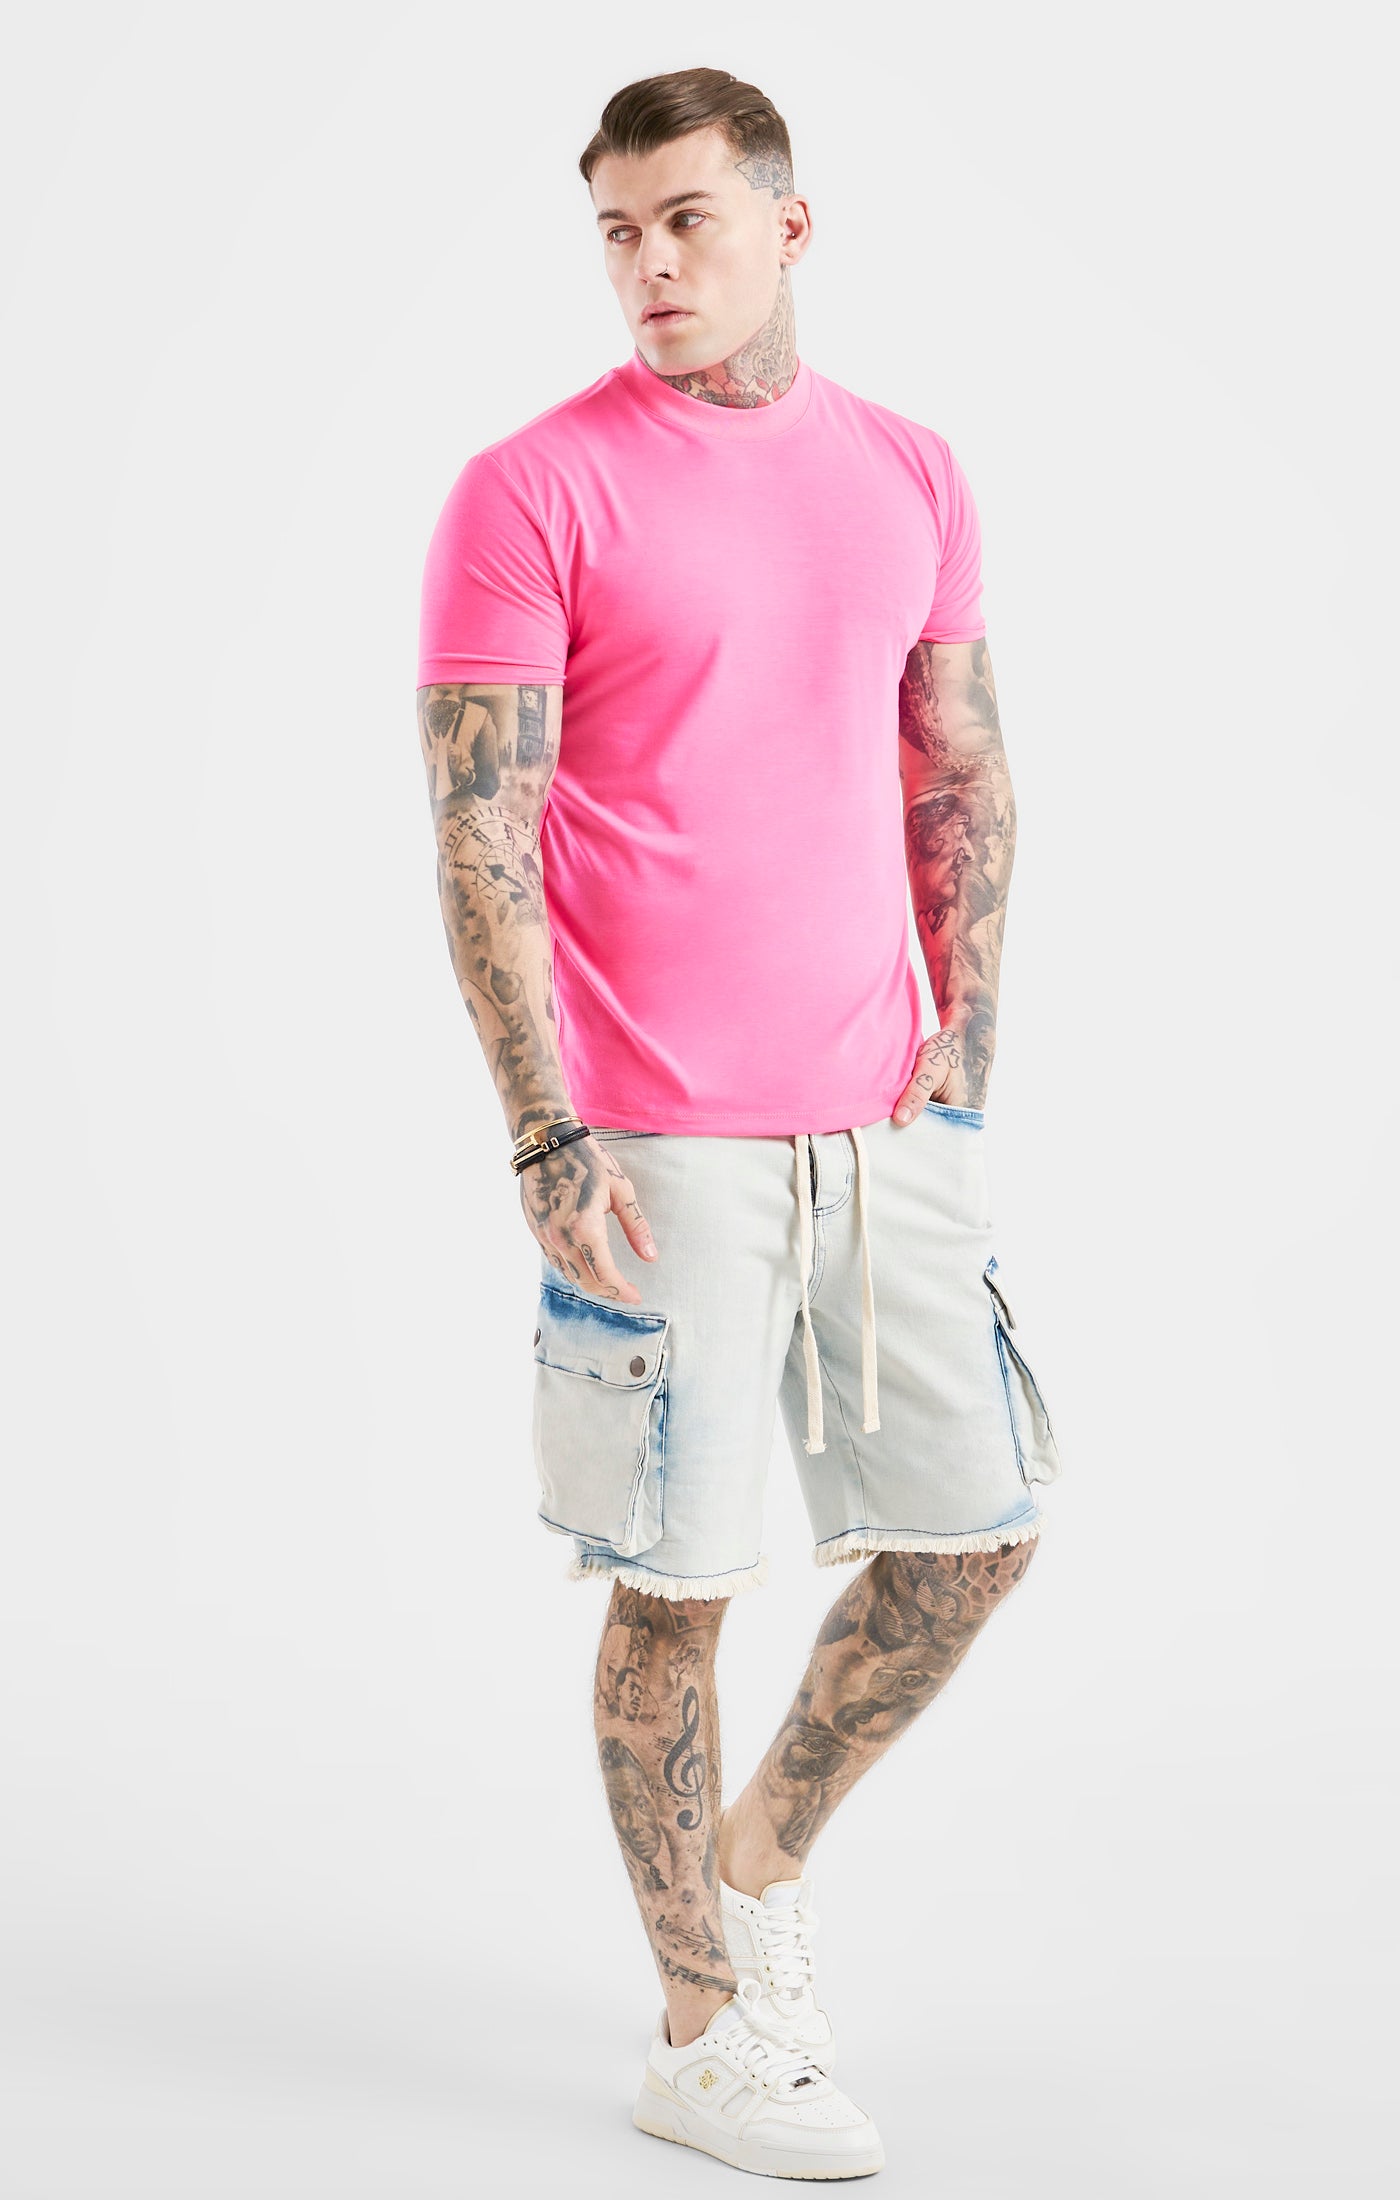 Messi x SikSilk Pink High Neck T-Shirt (4)